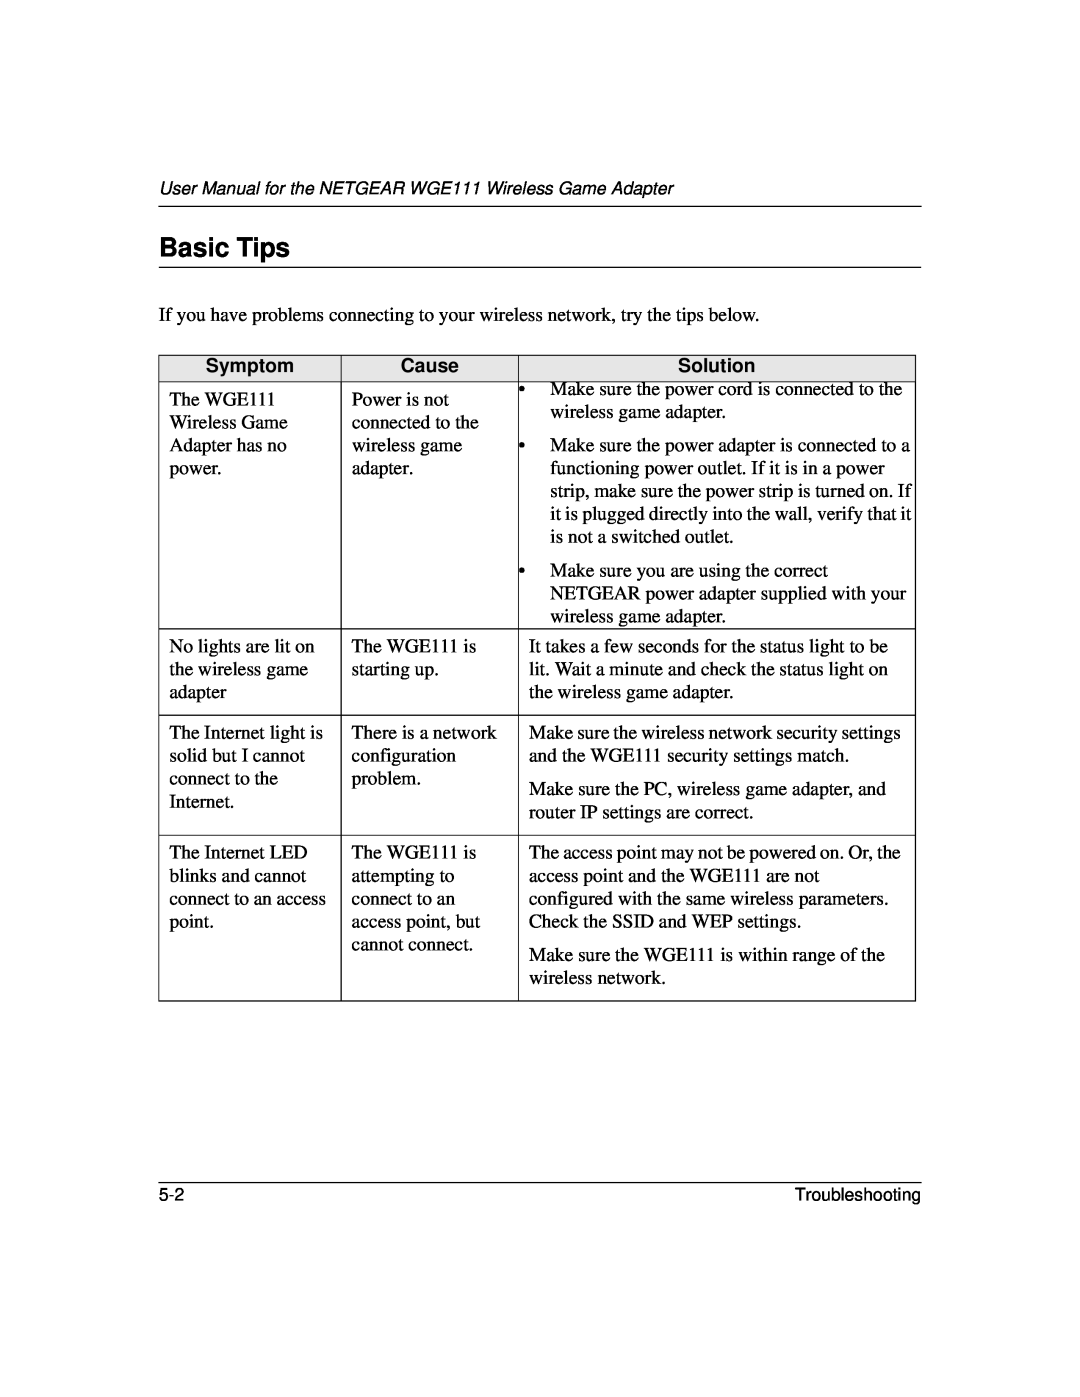 NETGEAR WGE111 user manual Basic Tips, Symptom, Cause, Solution 